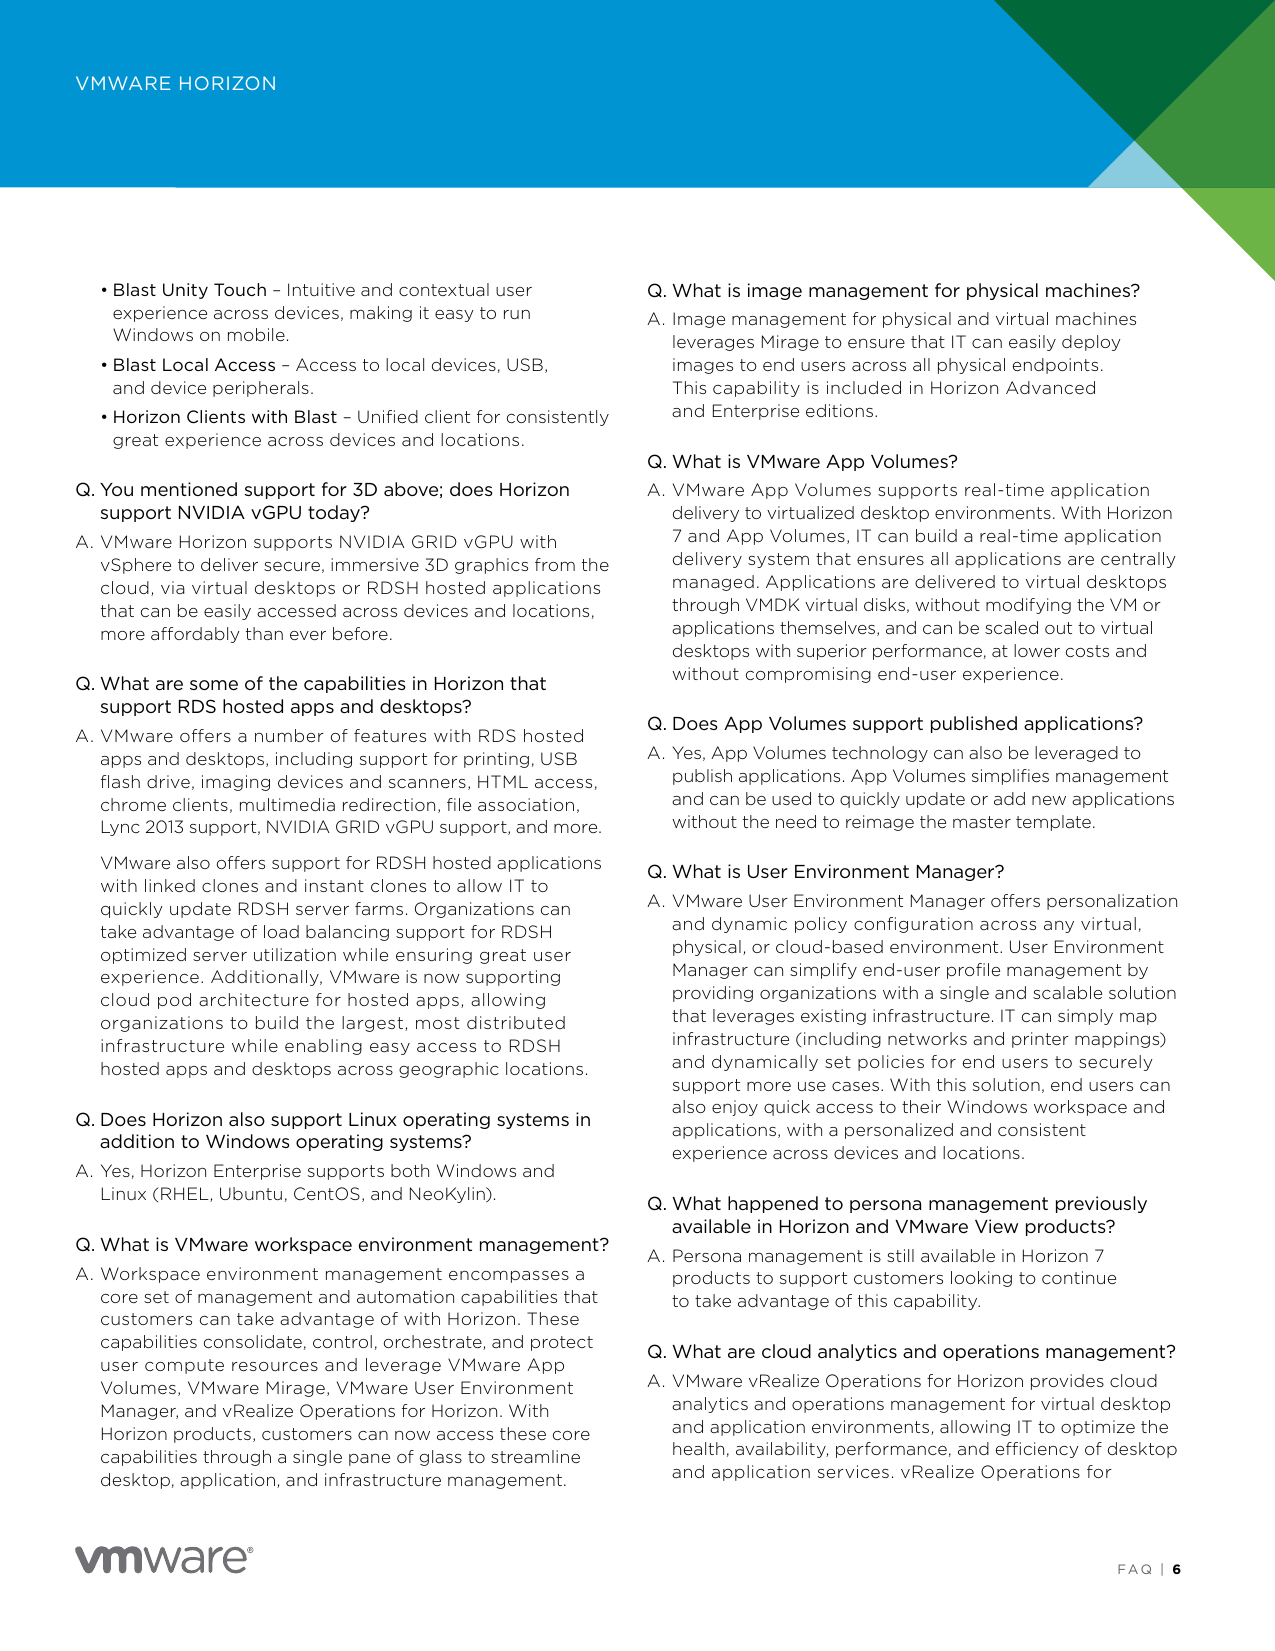 Page 6 of 12 - VMware Horizon 7 FAQ Vmware-horizon-7-faq